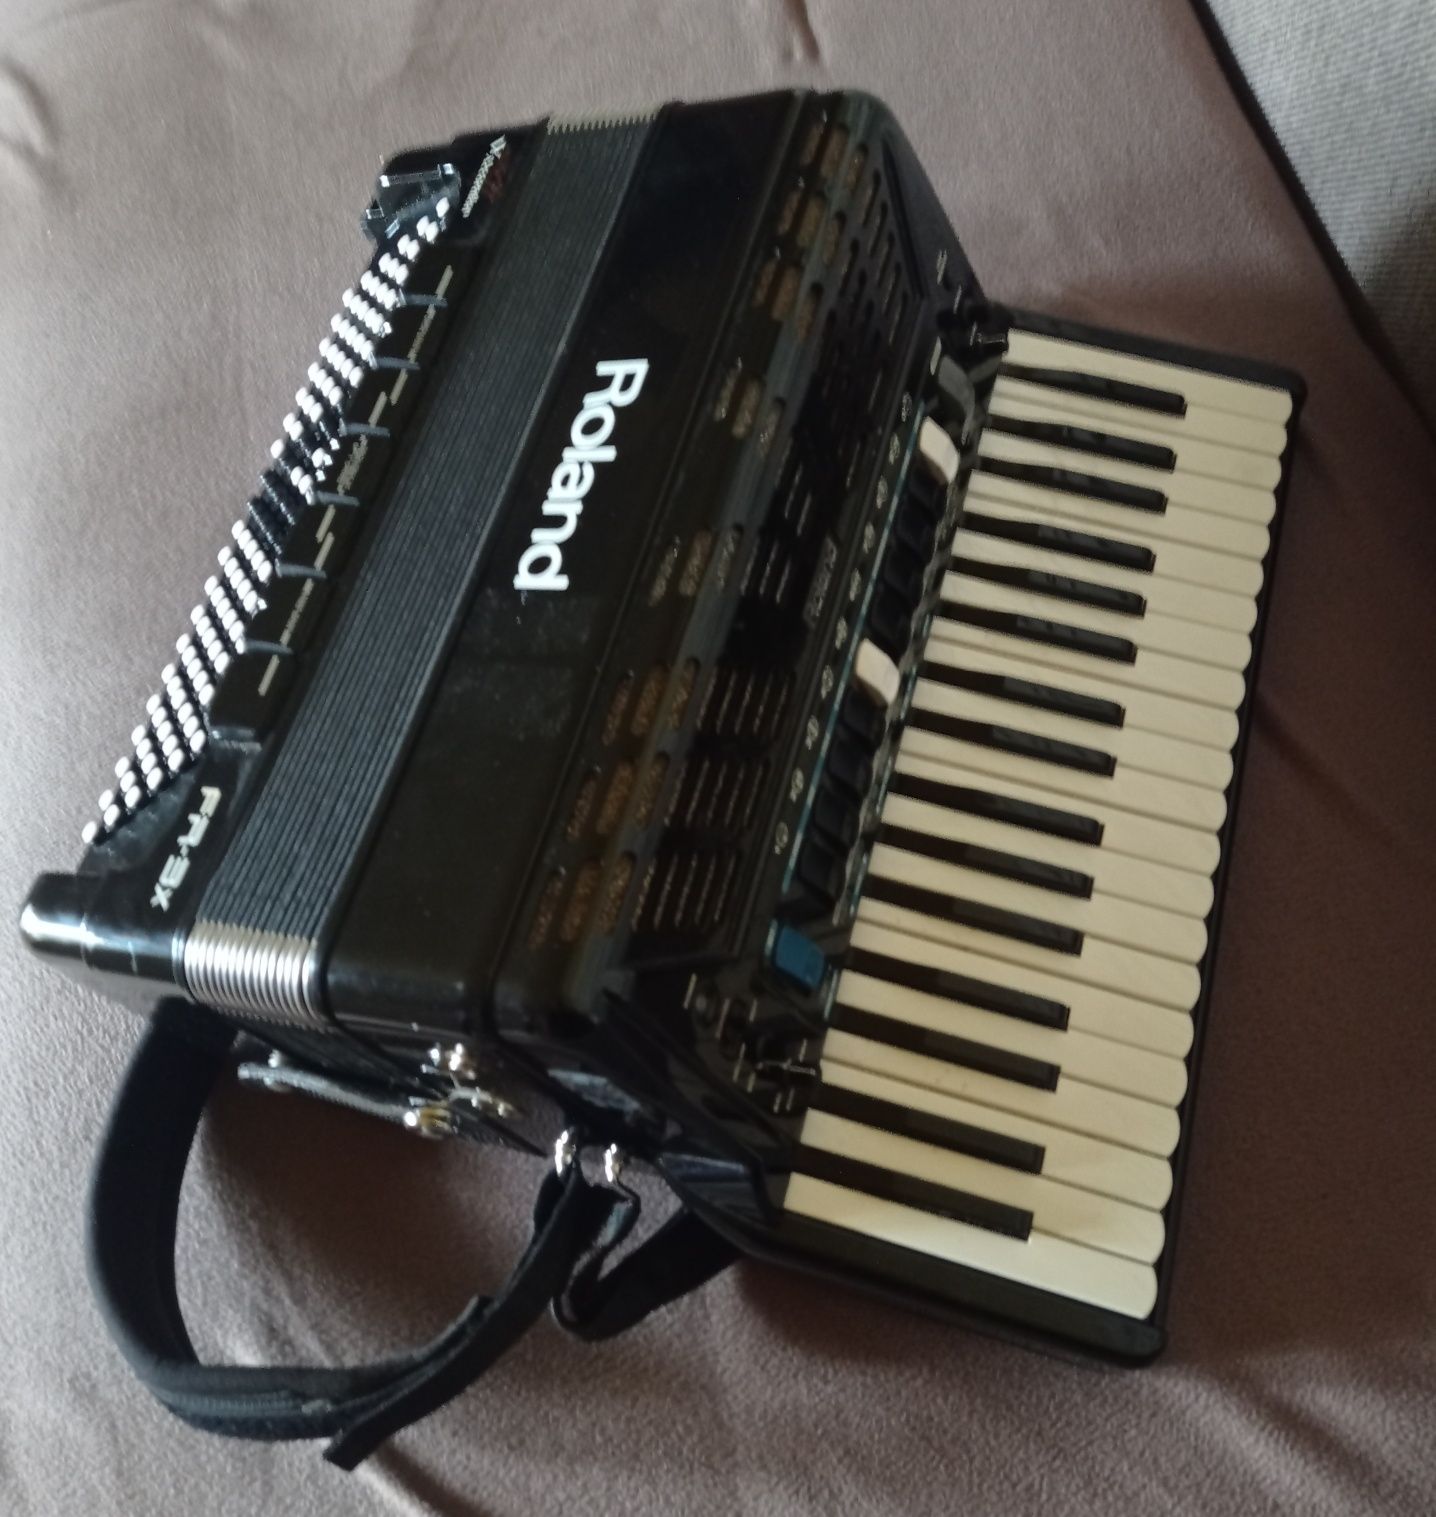 Vând acordeon electronic Roland FR3x